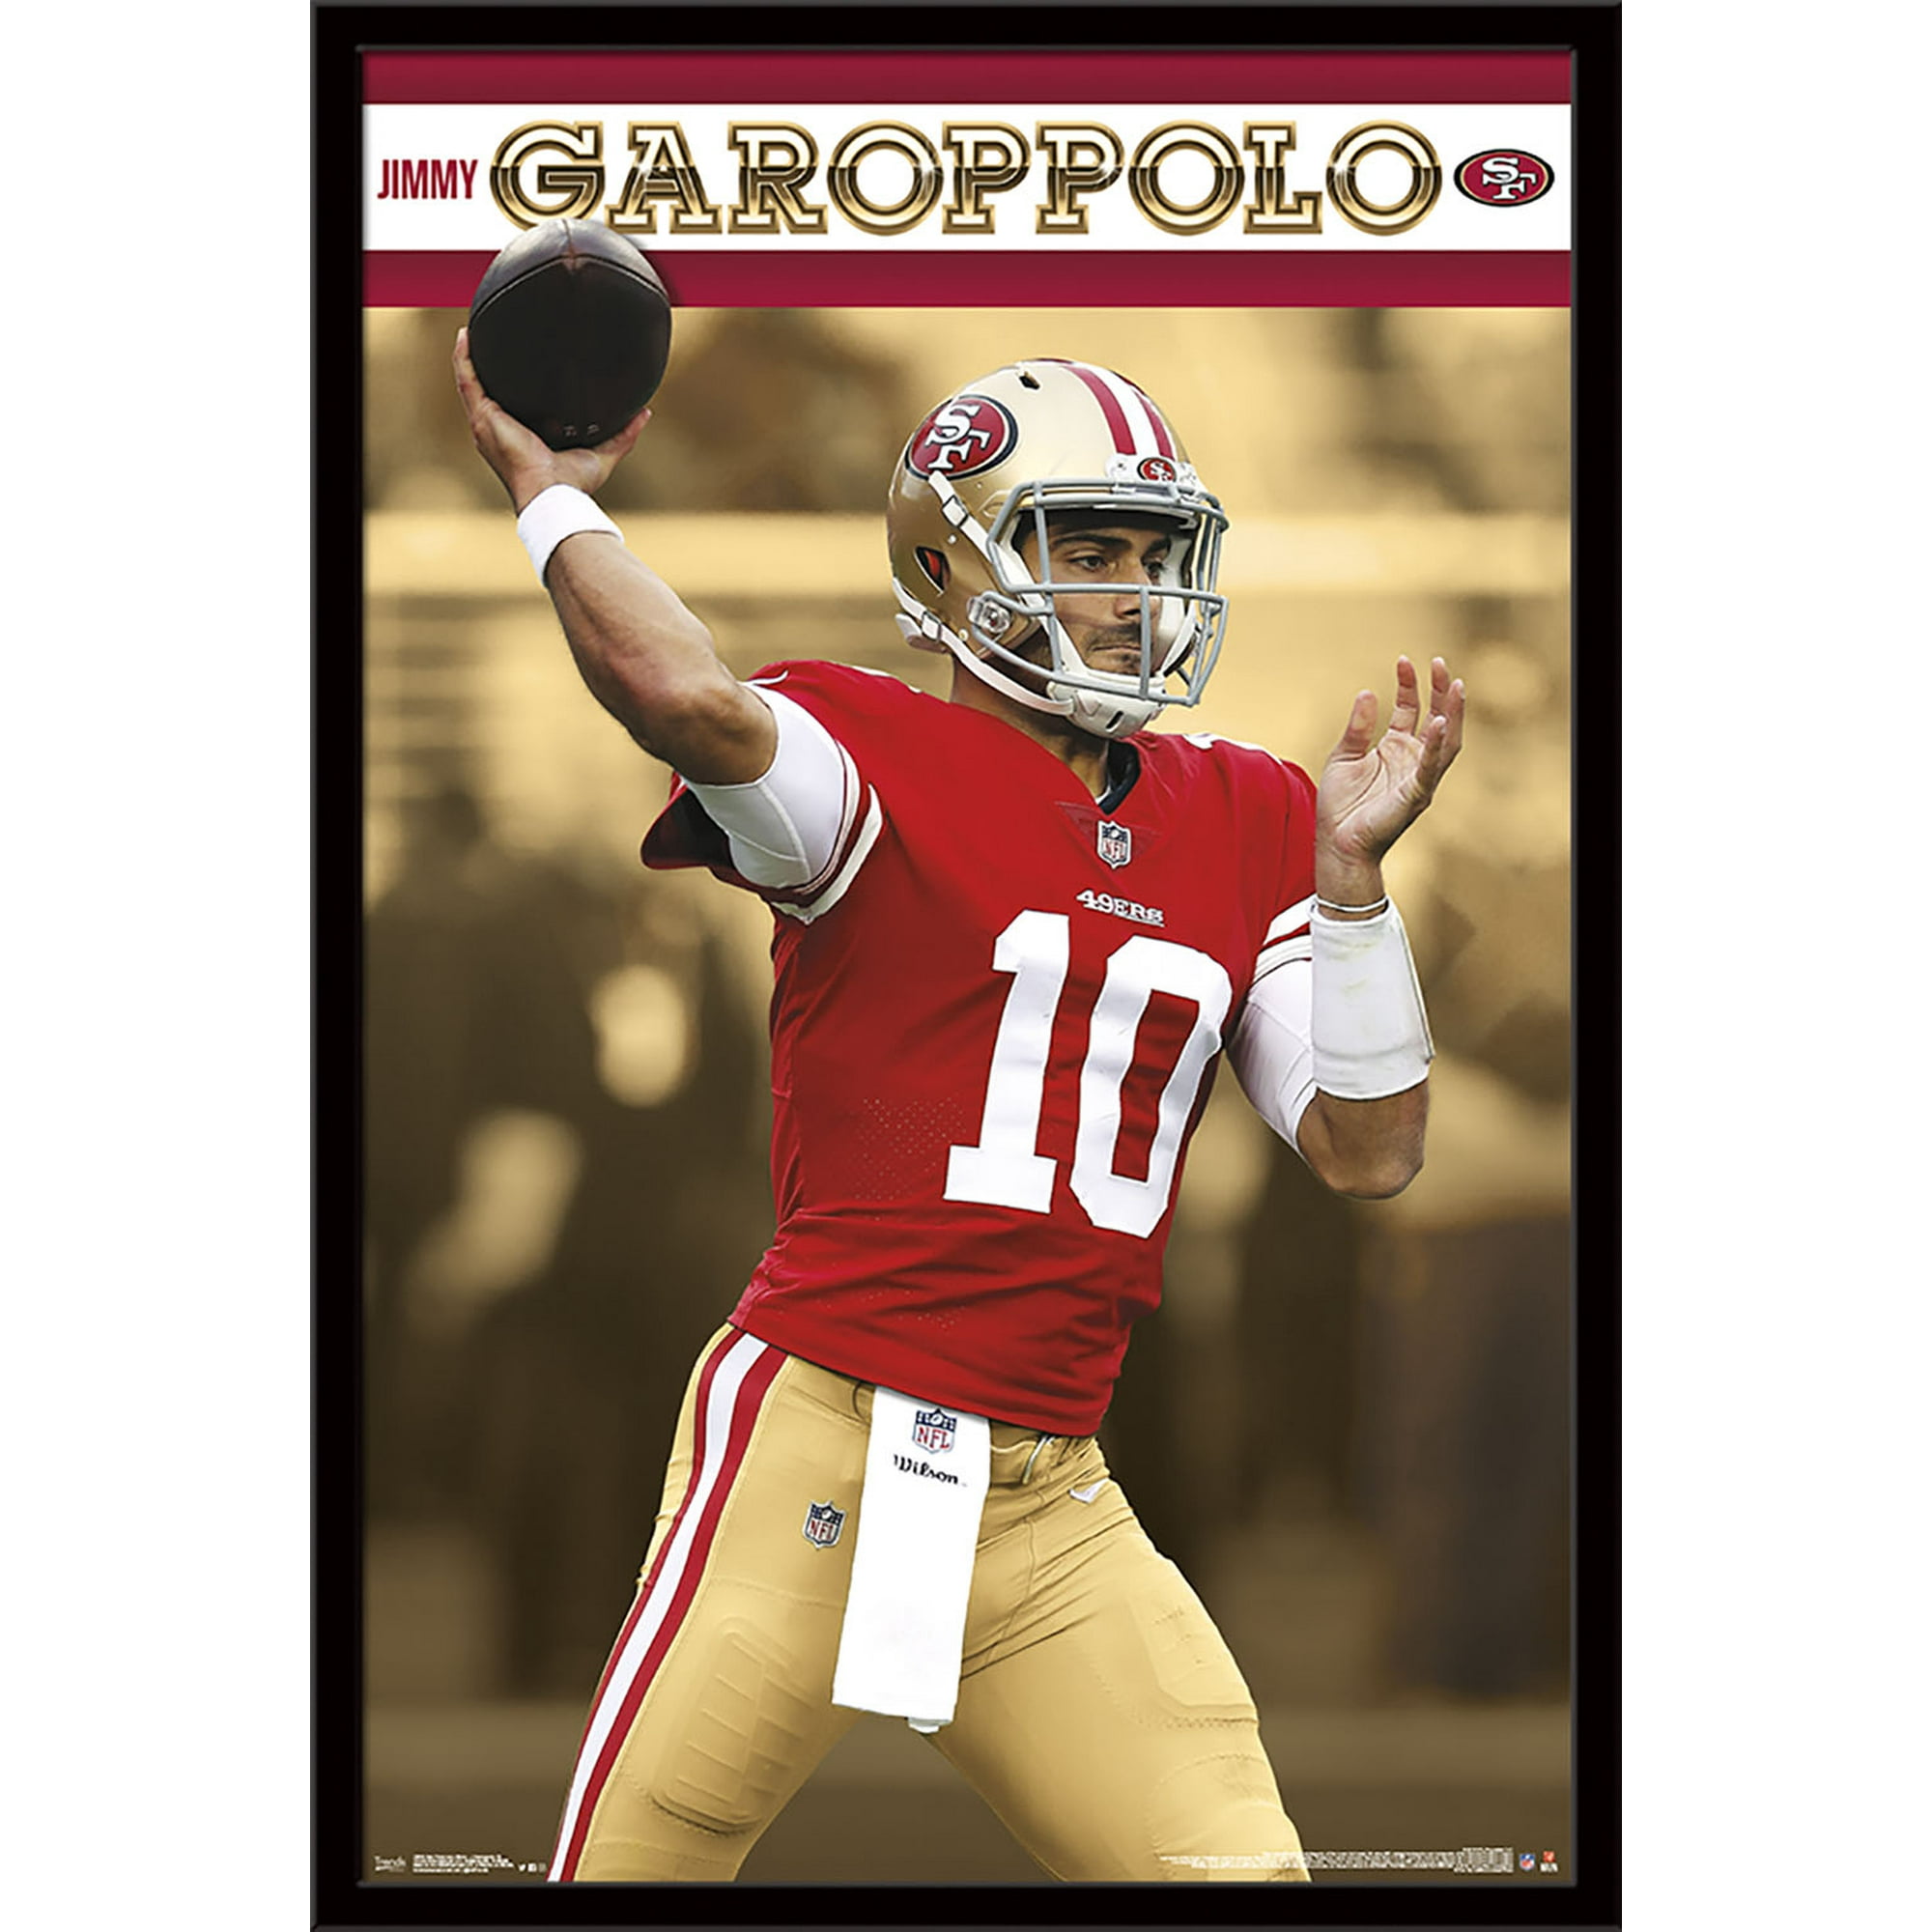 NFL San Francisco 49ers - Jimmy Garoppolo 18 Wall Poster, 22.375' x 34',  Framed 